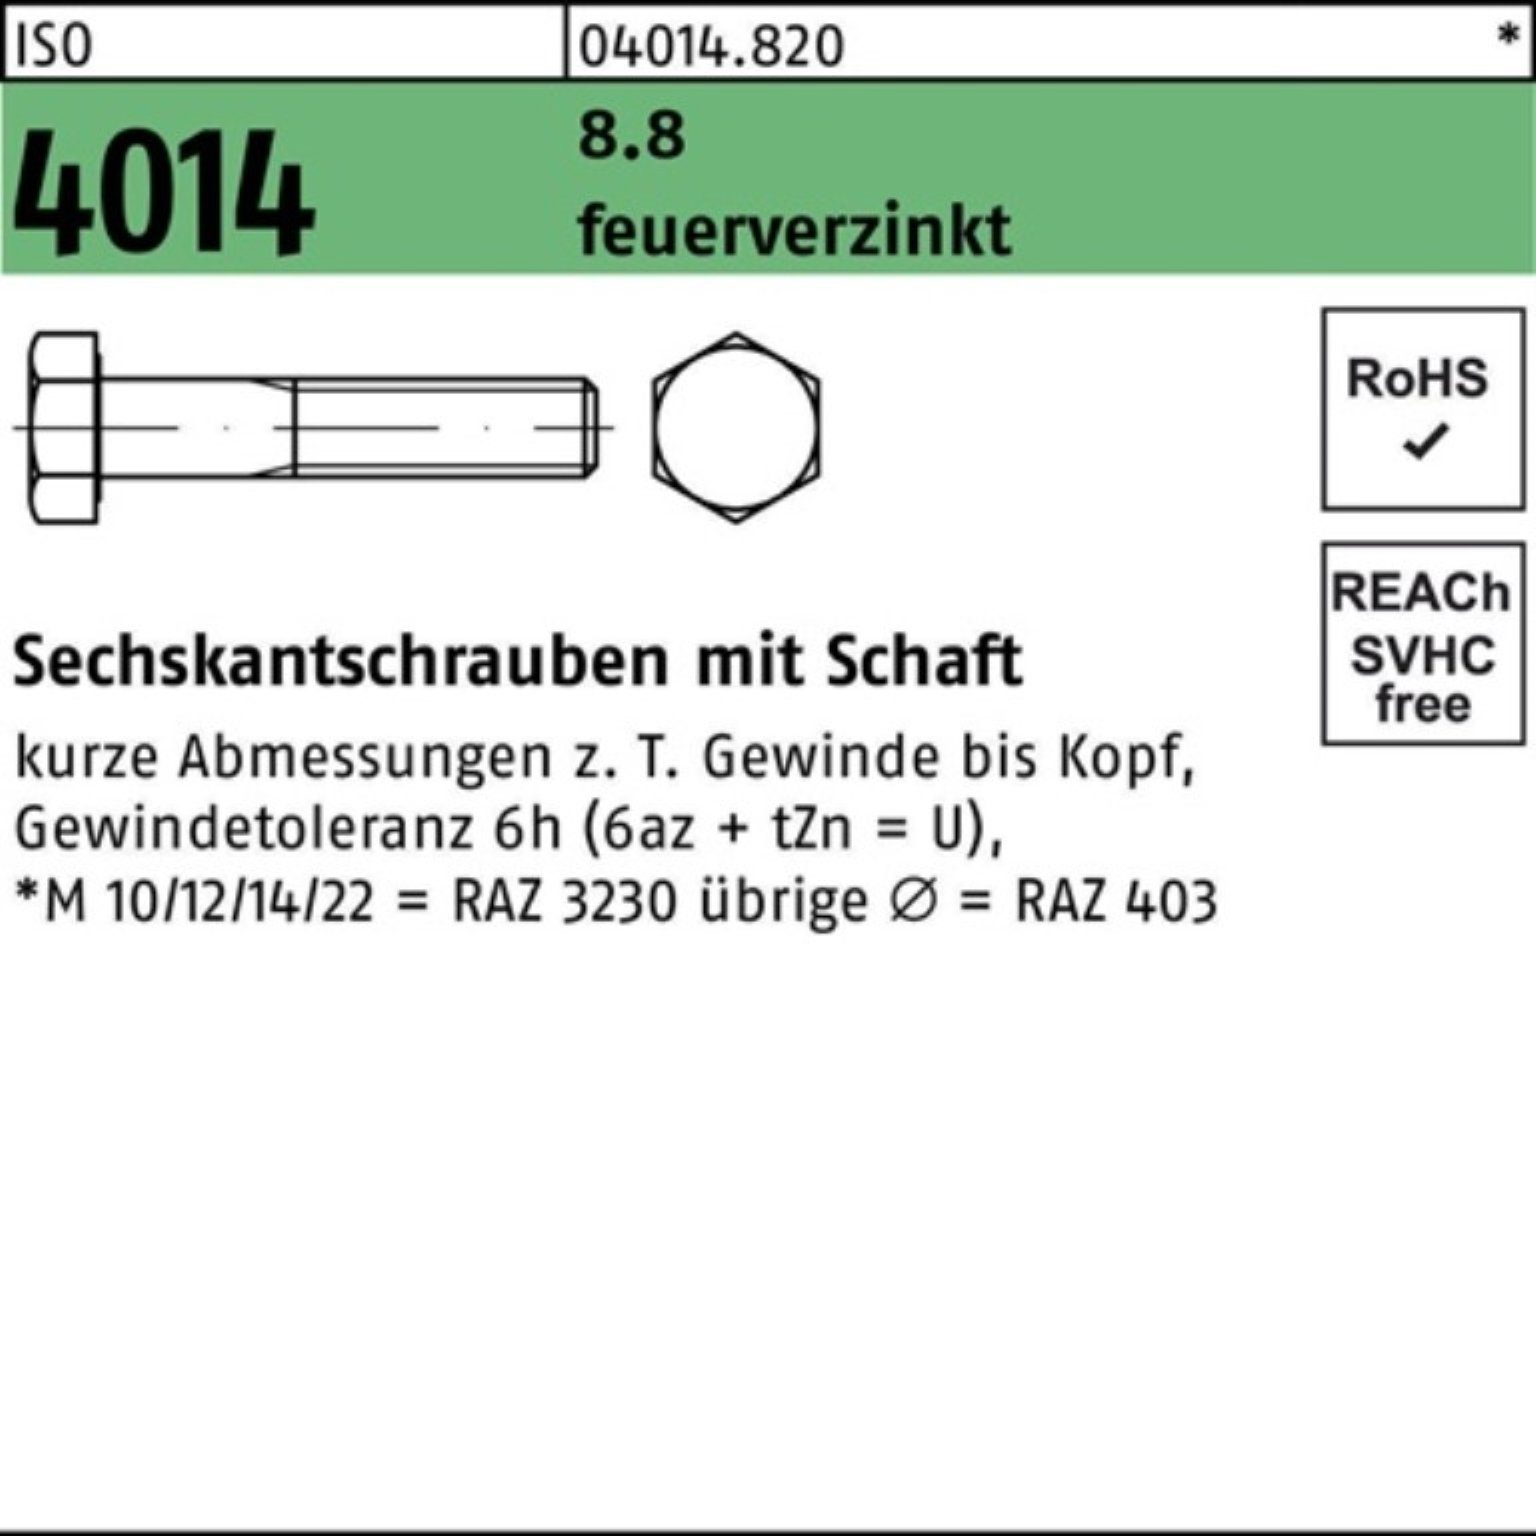 Bufab Sechskantschraube 100er Pack Sechskantschraube ISO 4014 Schaft M27x 120 8.8 feuerverz. 1 | Schrauben